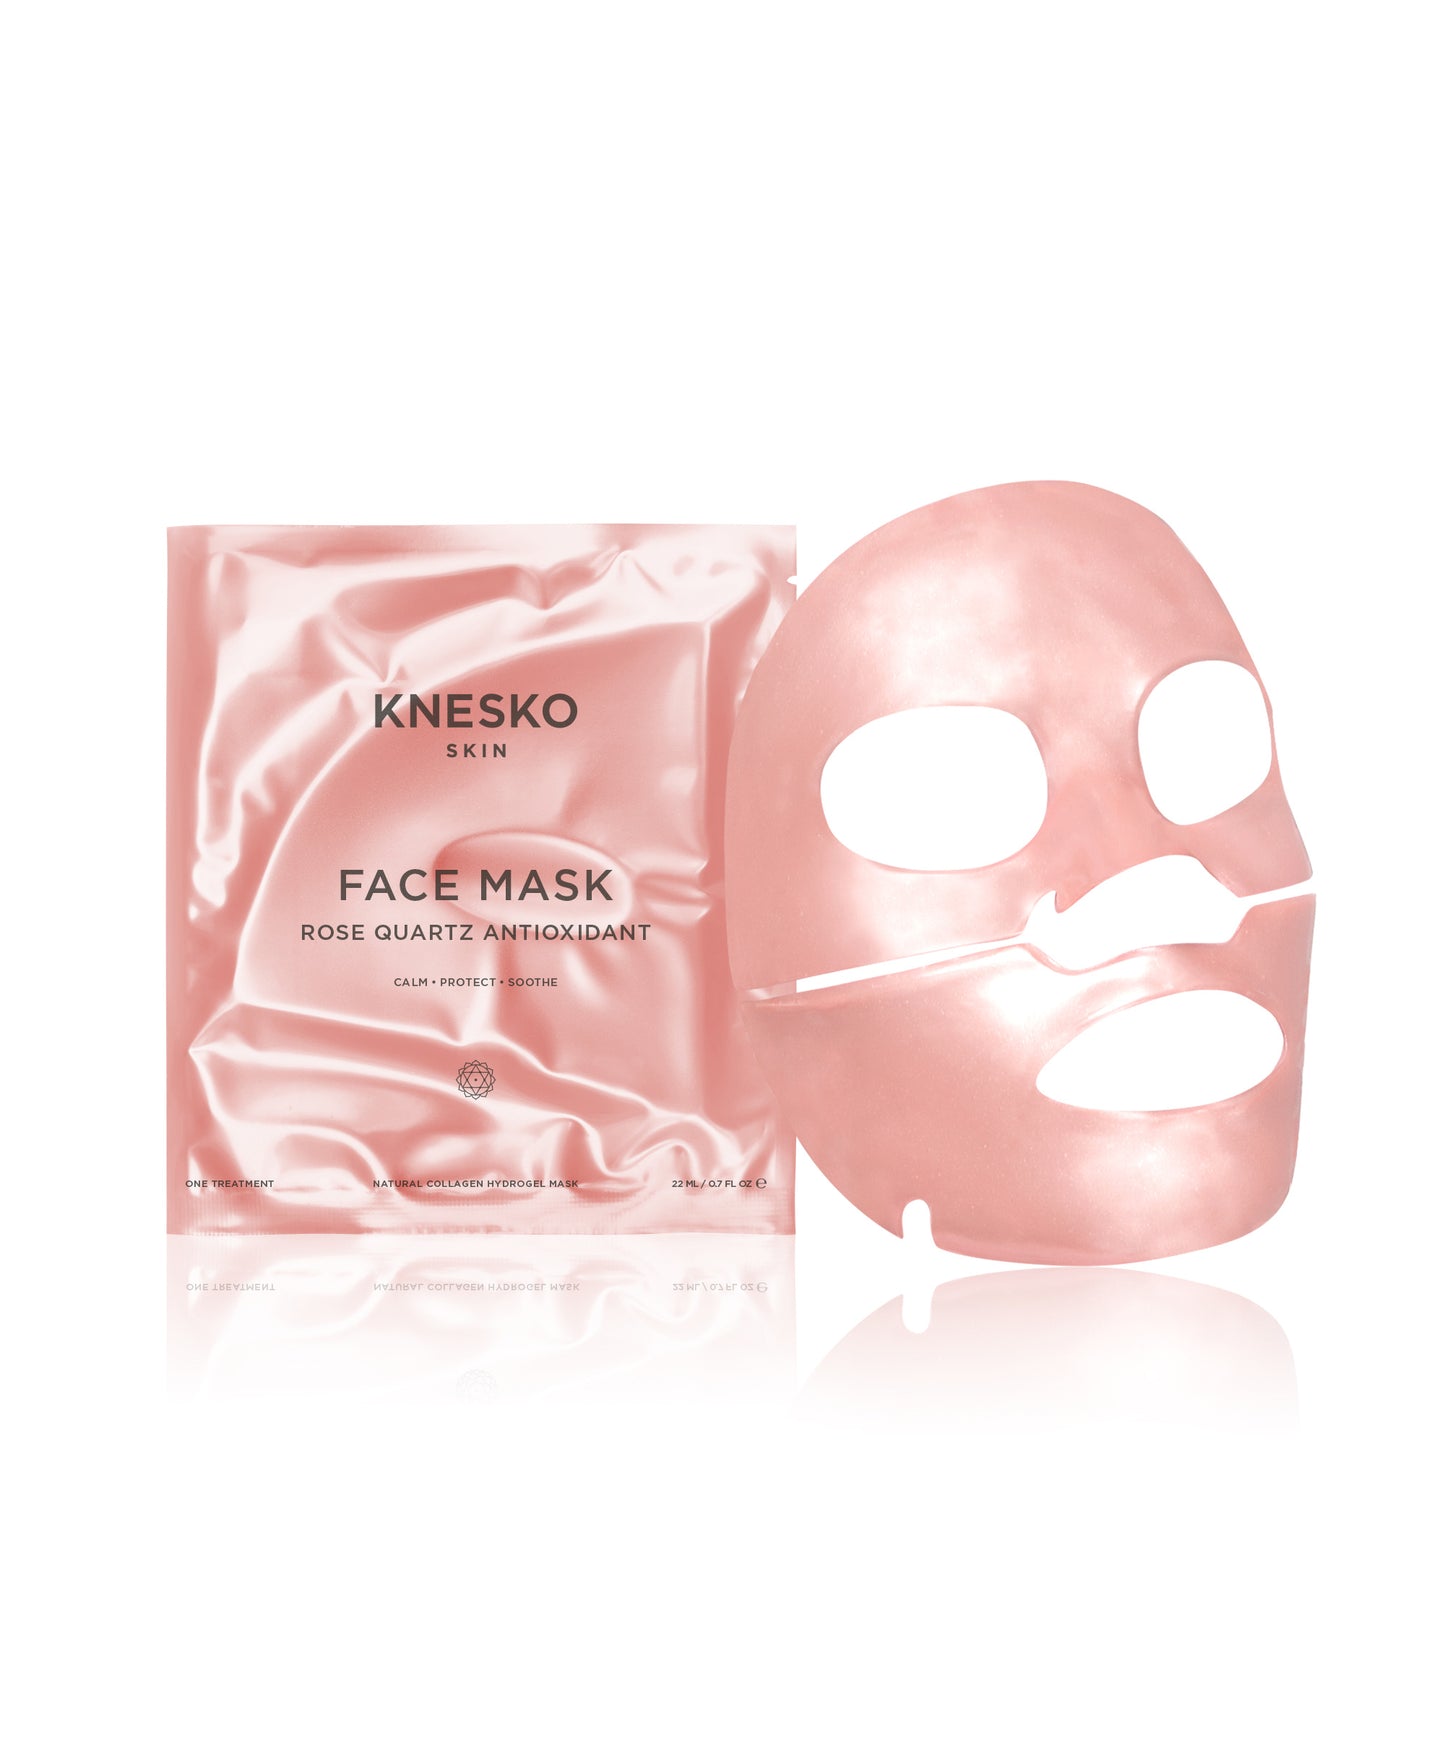 Rose Quartz Antioxidant face mask.